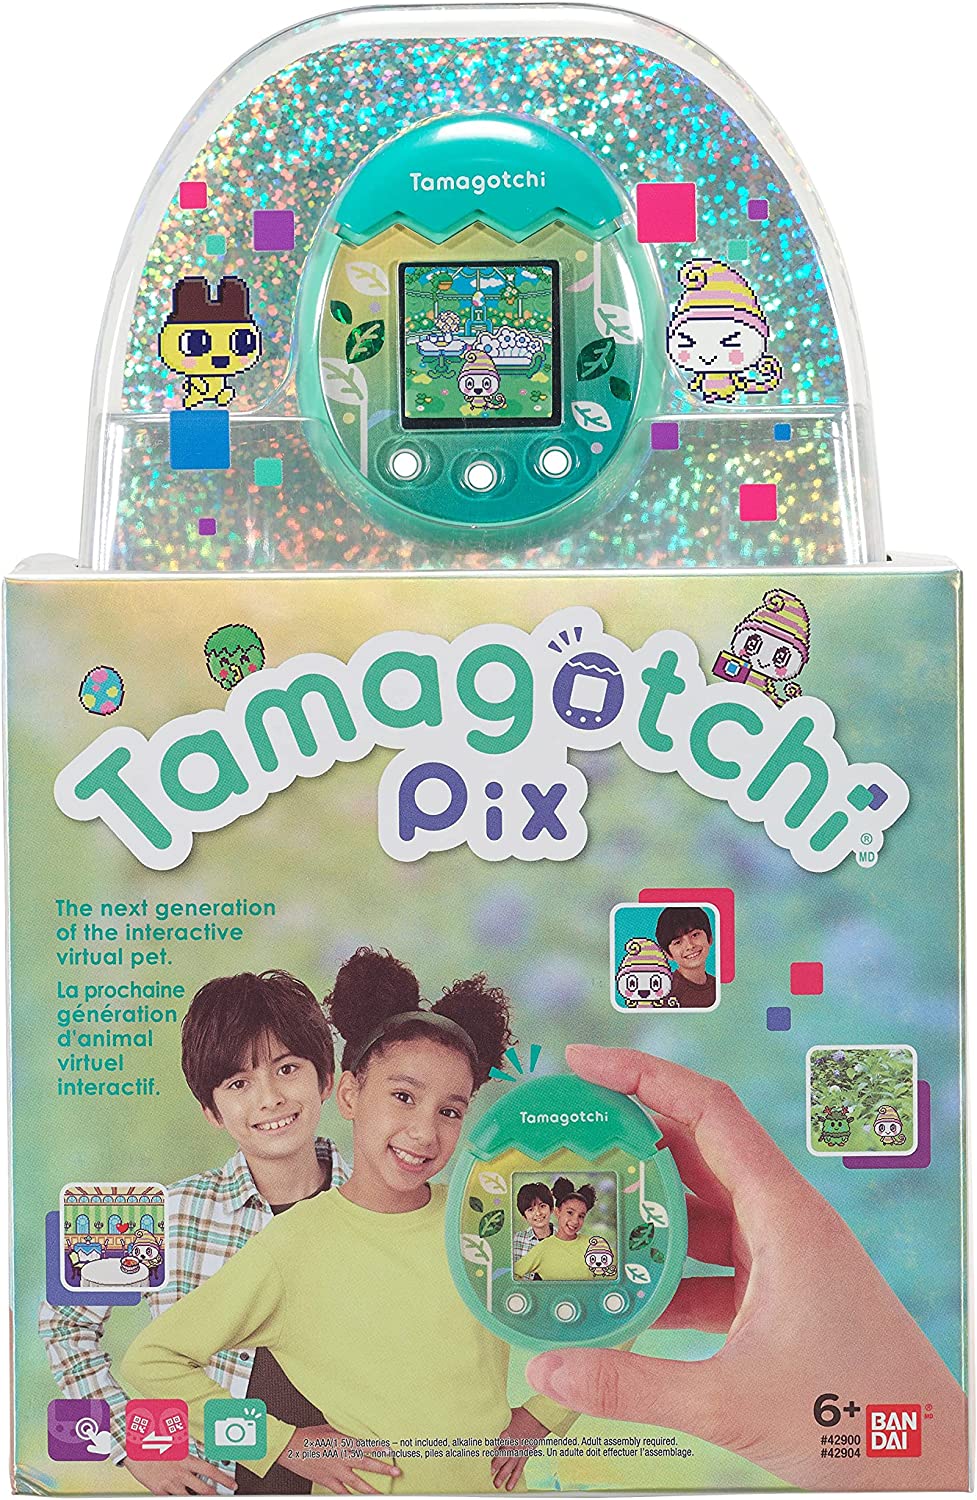 Bandai Original Tamagotchi Pix Electronic Virtual Pet Machine Color Screen Interactive E-pet Game